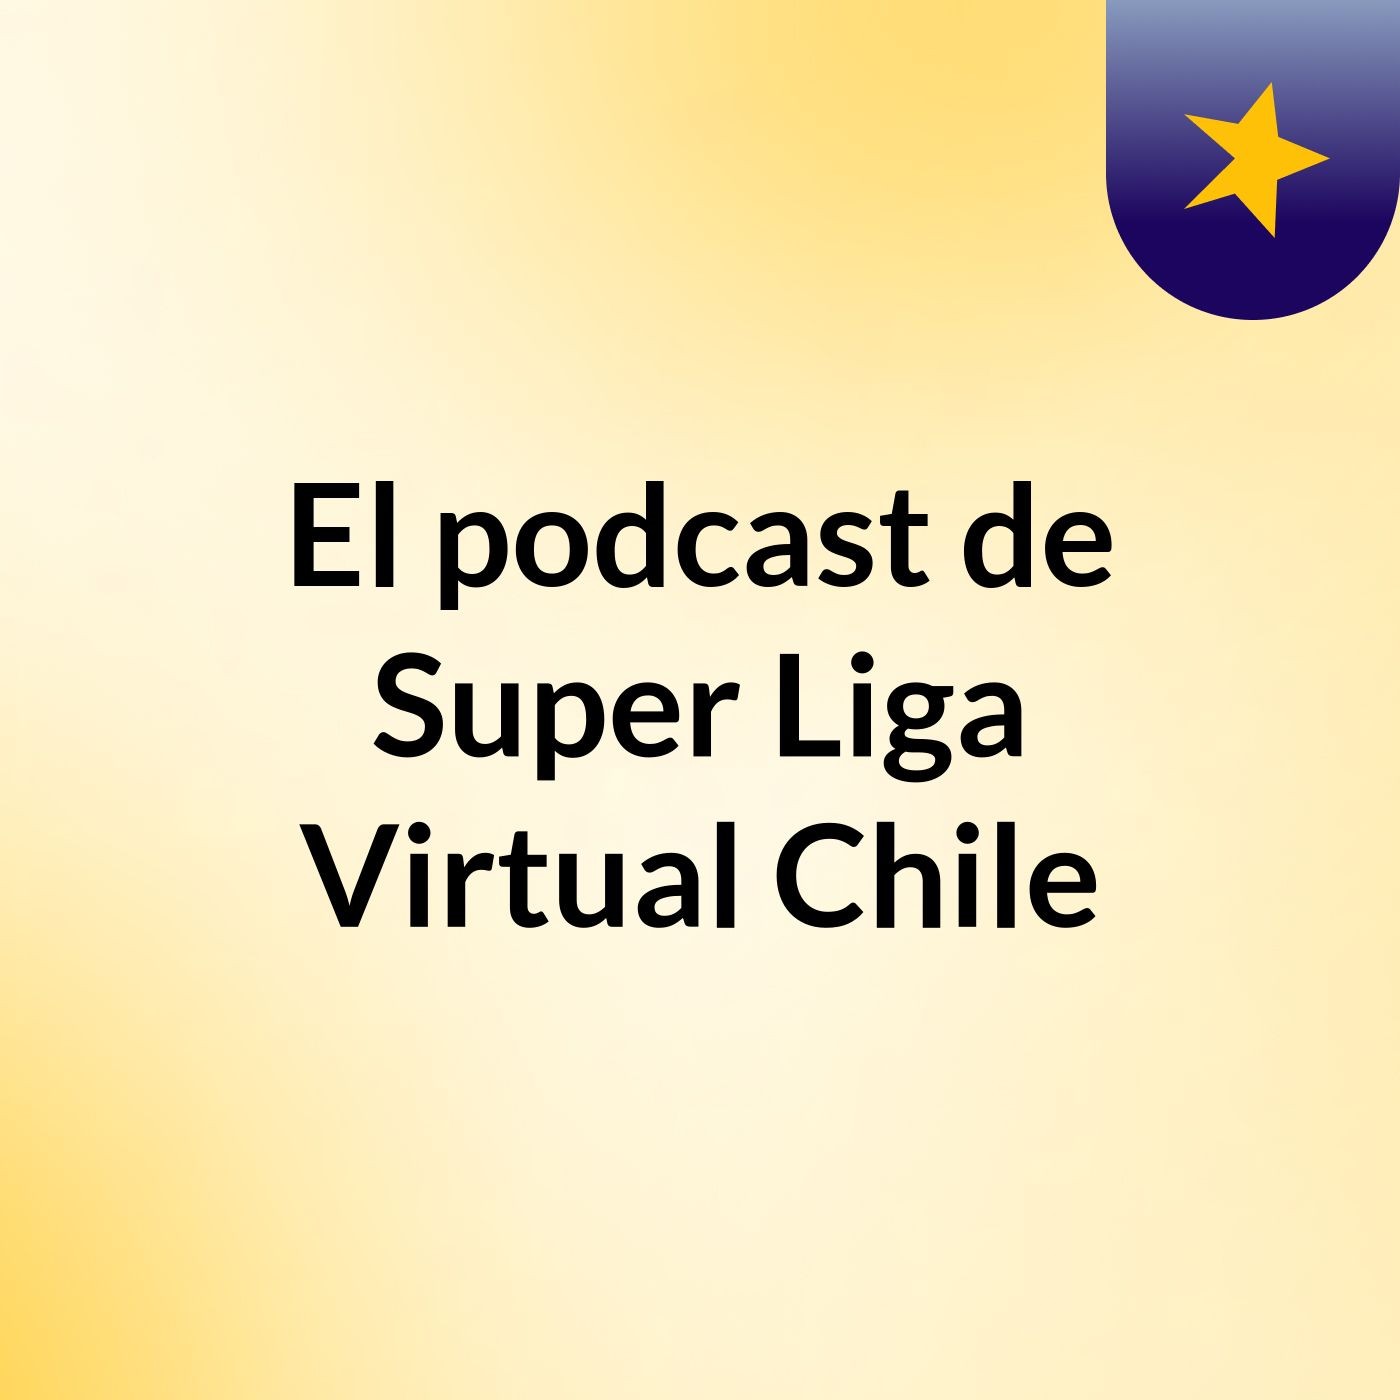 El podcast de Super Liga Virtual Chile